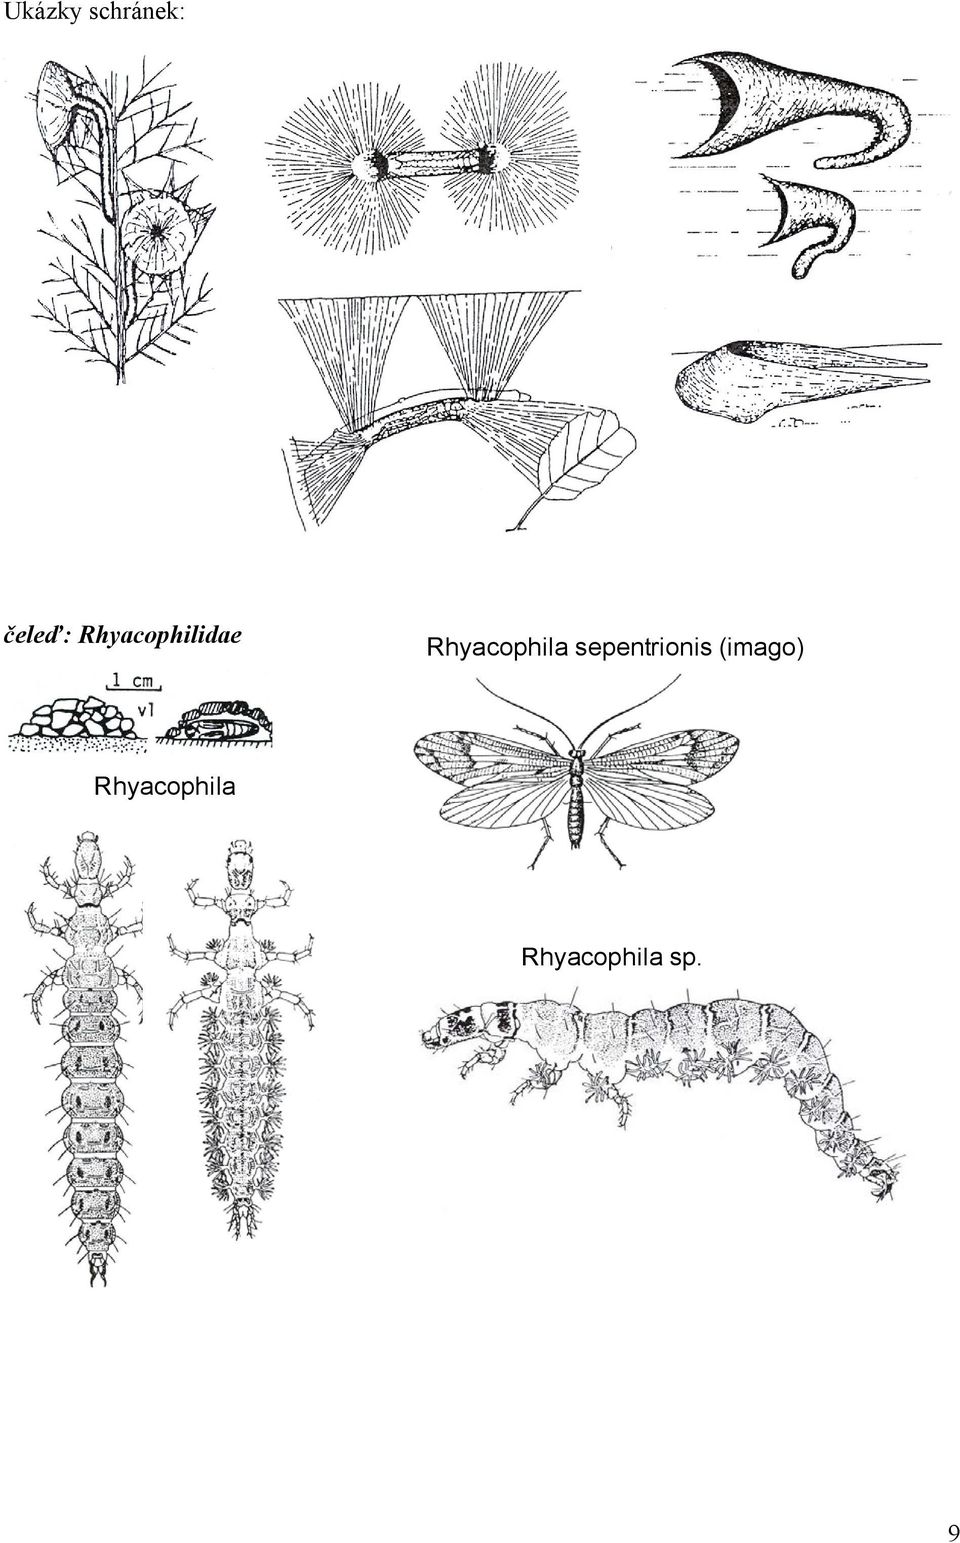 Rhyacophila sepentrionis